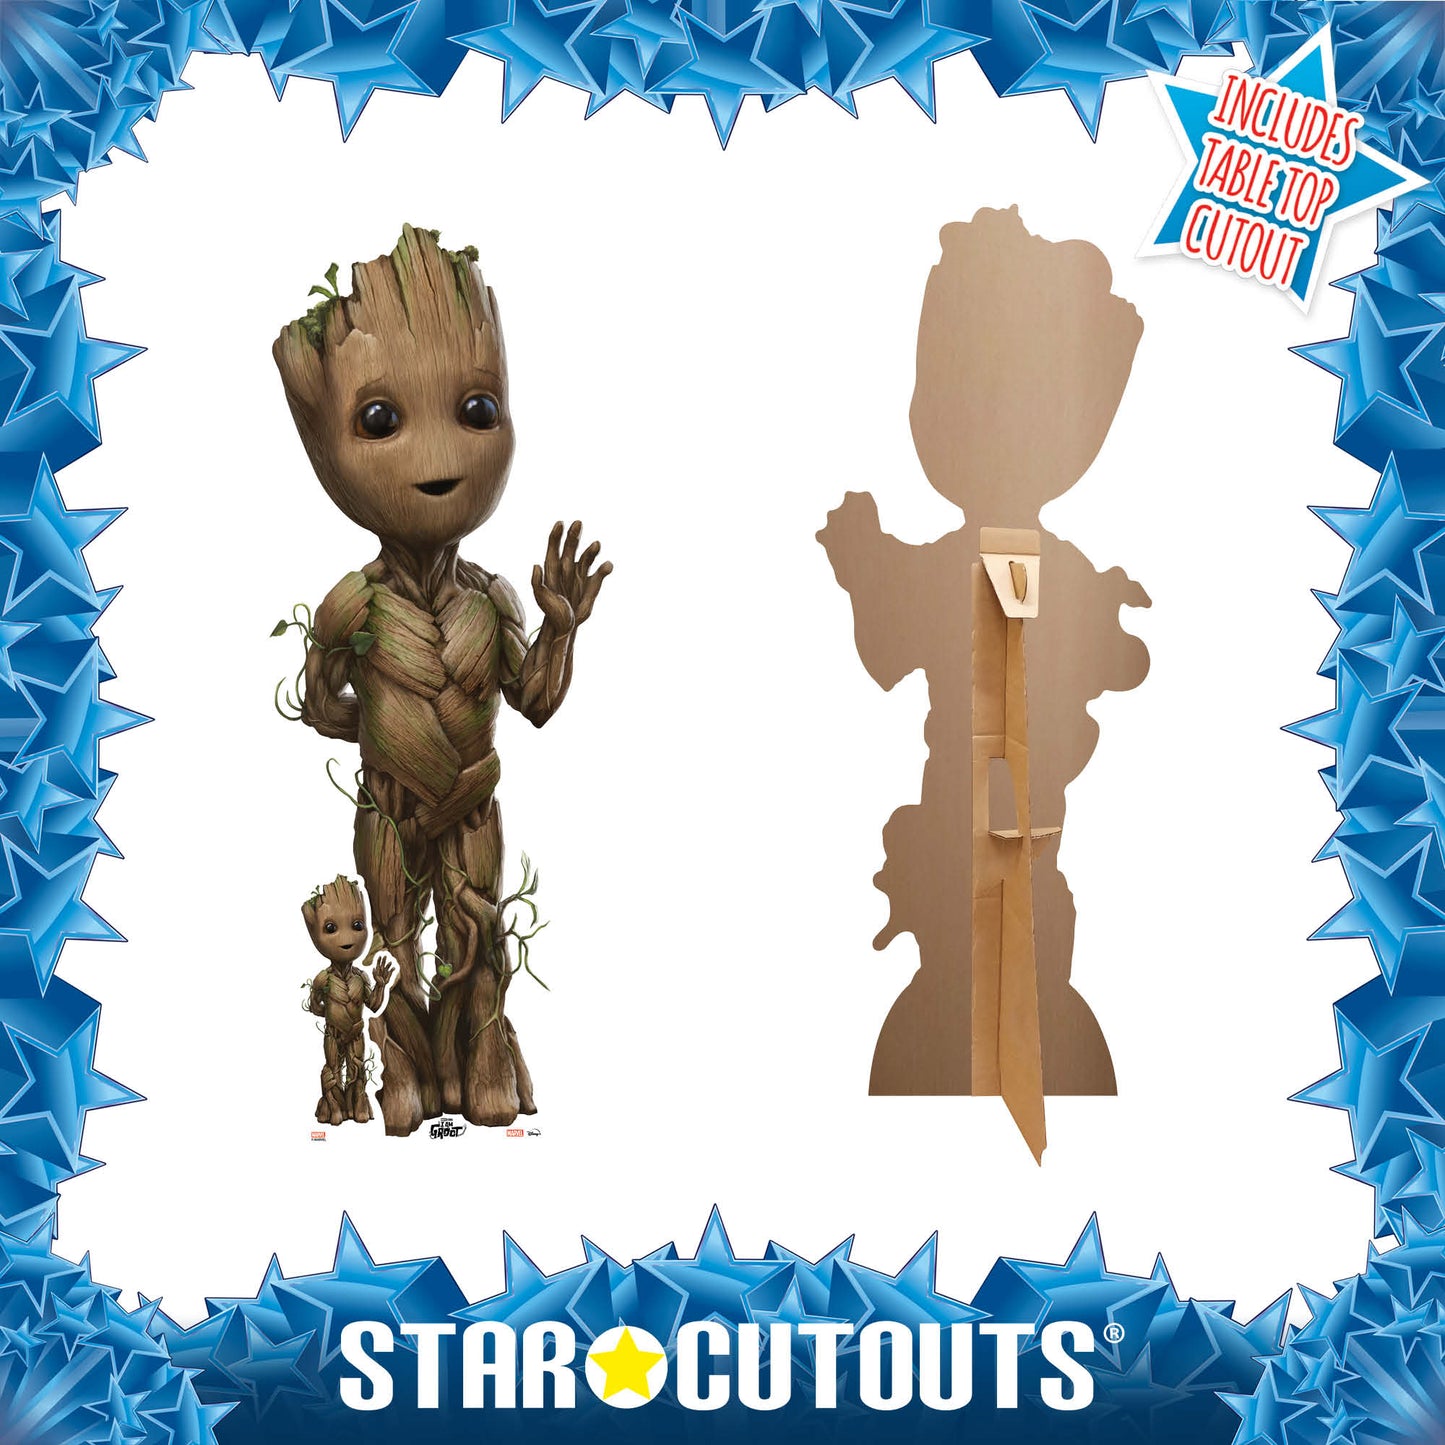 Baby Groot Star Mini Cardboard Cut Out